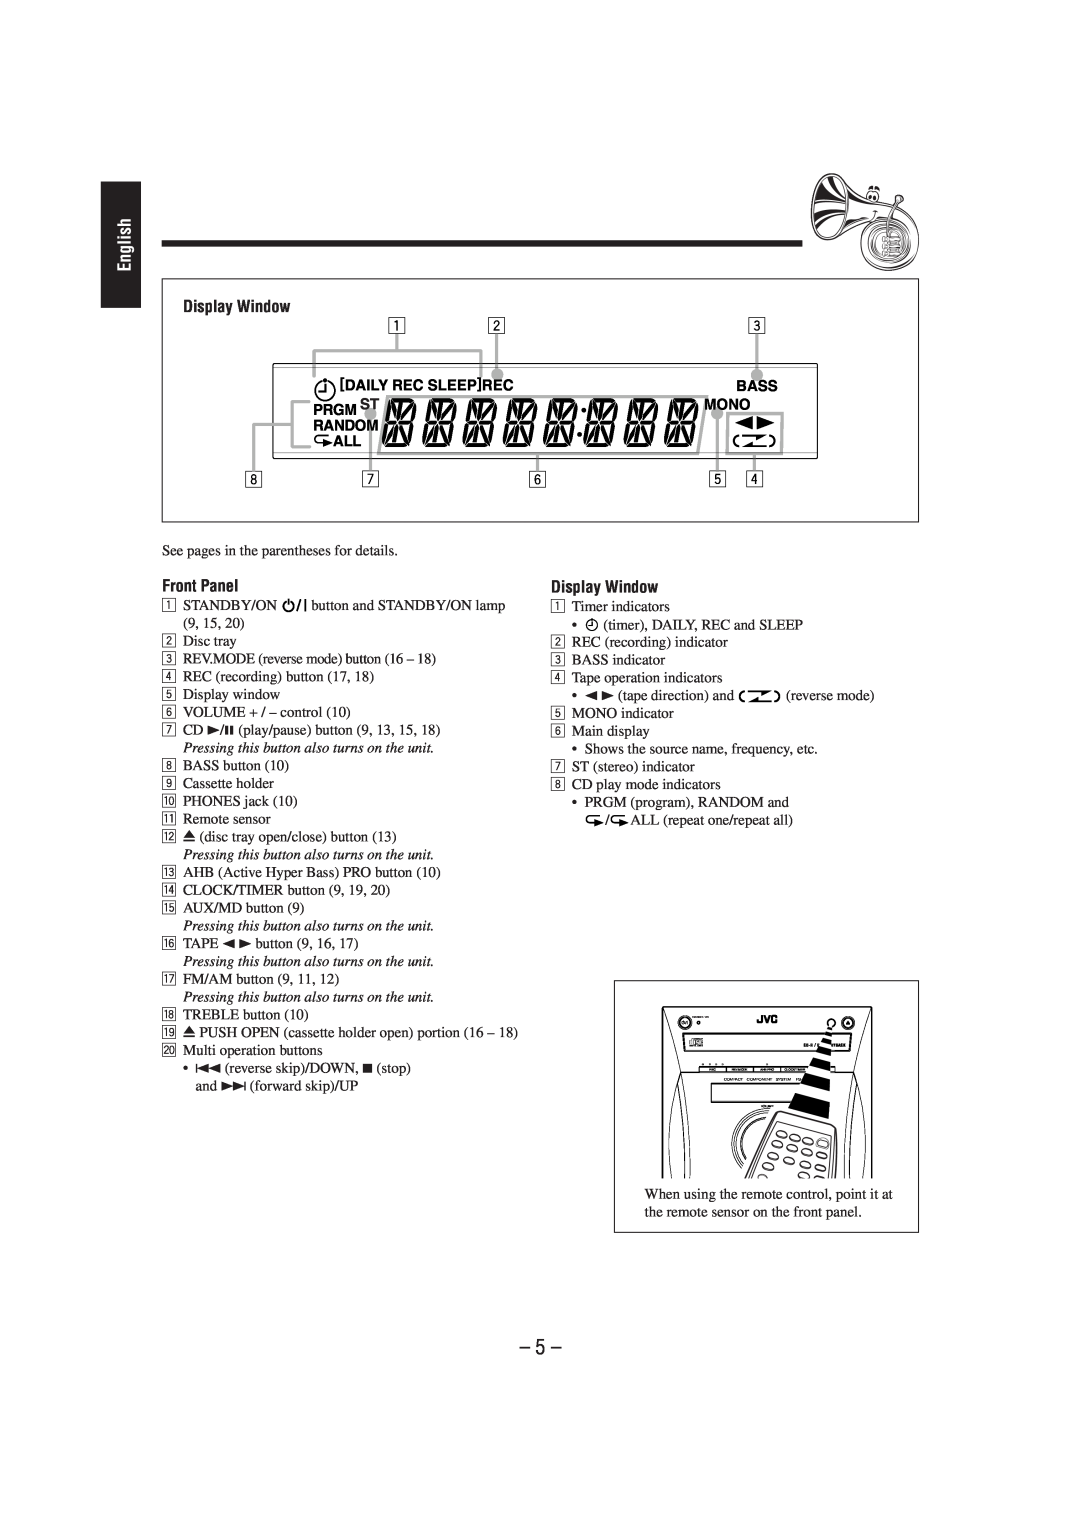 JVC FS-L30 manual English, Display Window, Front Panel, Bass, Prgm St, Mono, Daily Rec Sleep 